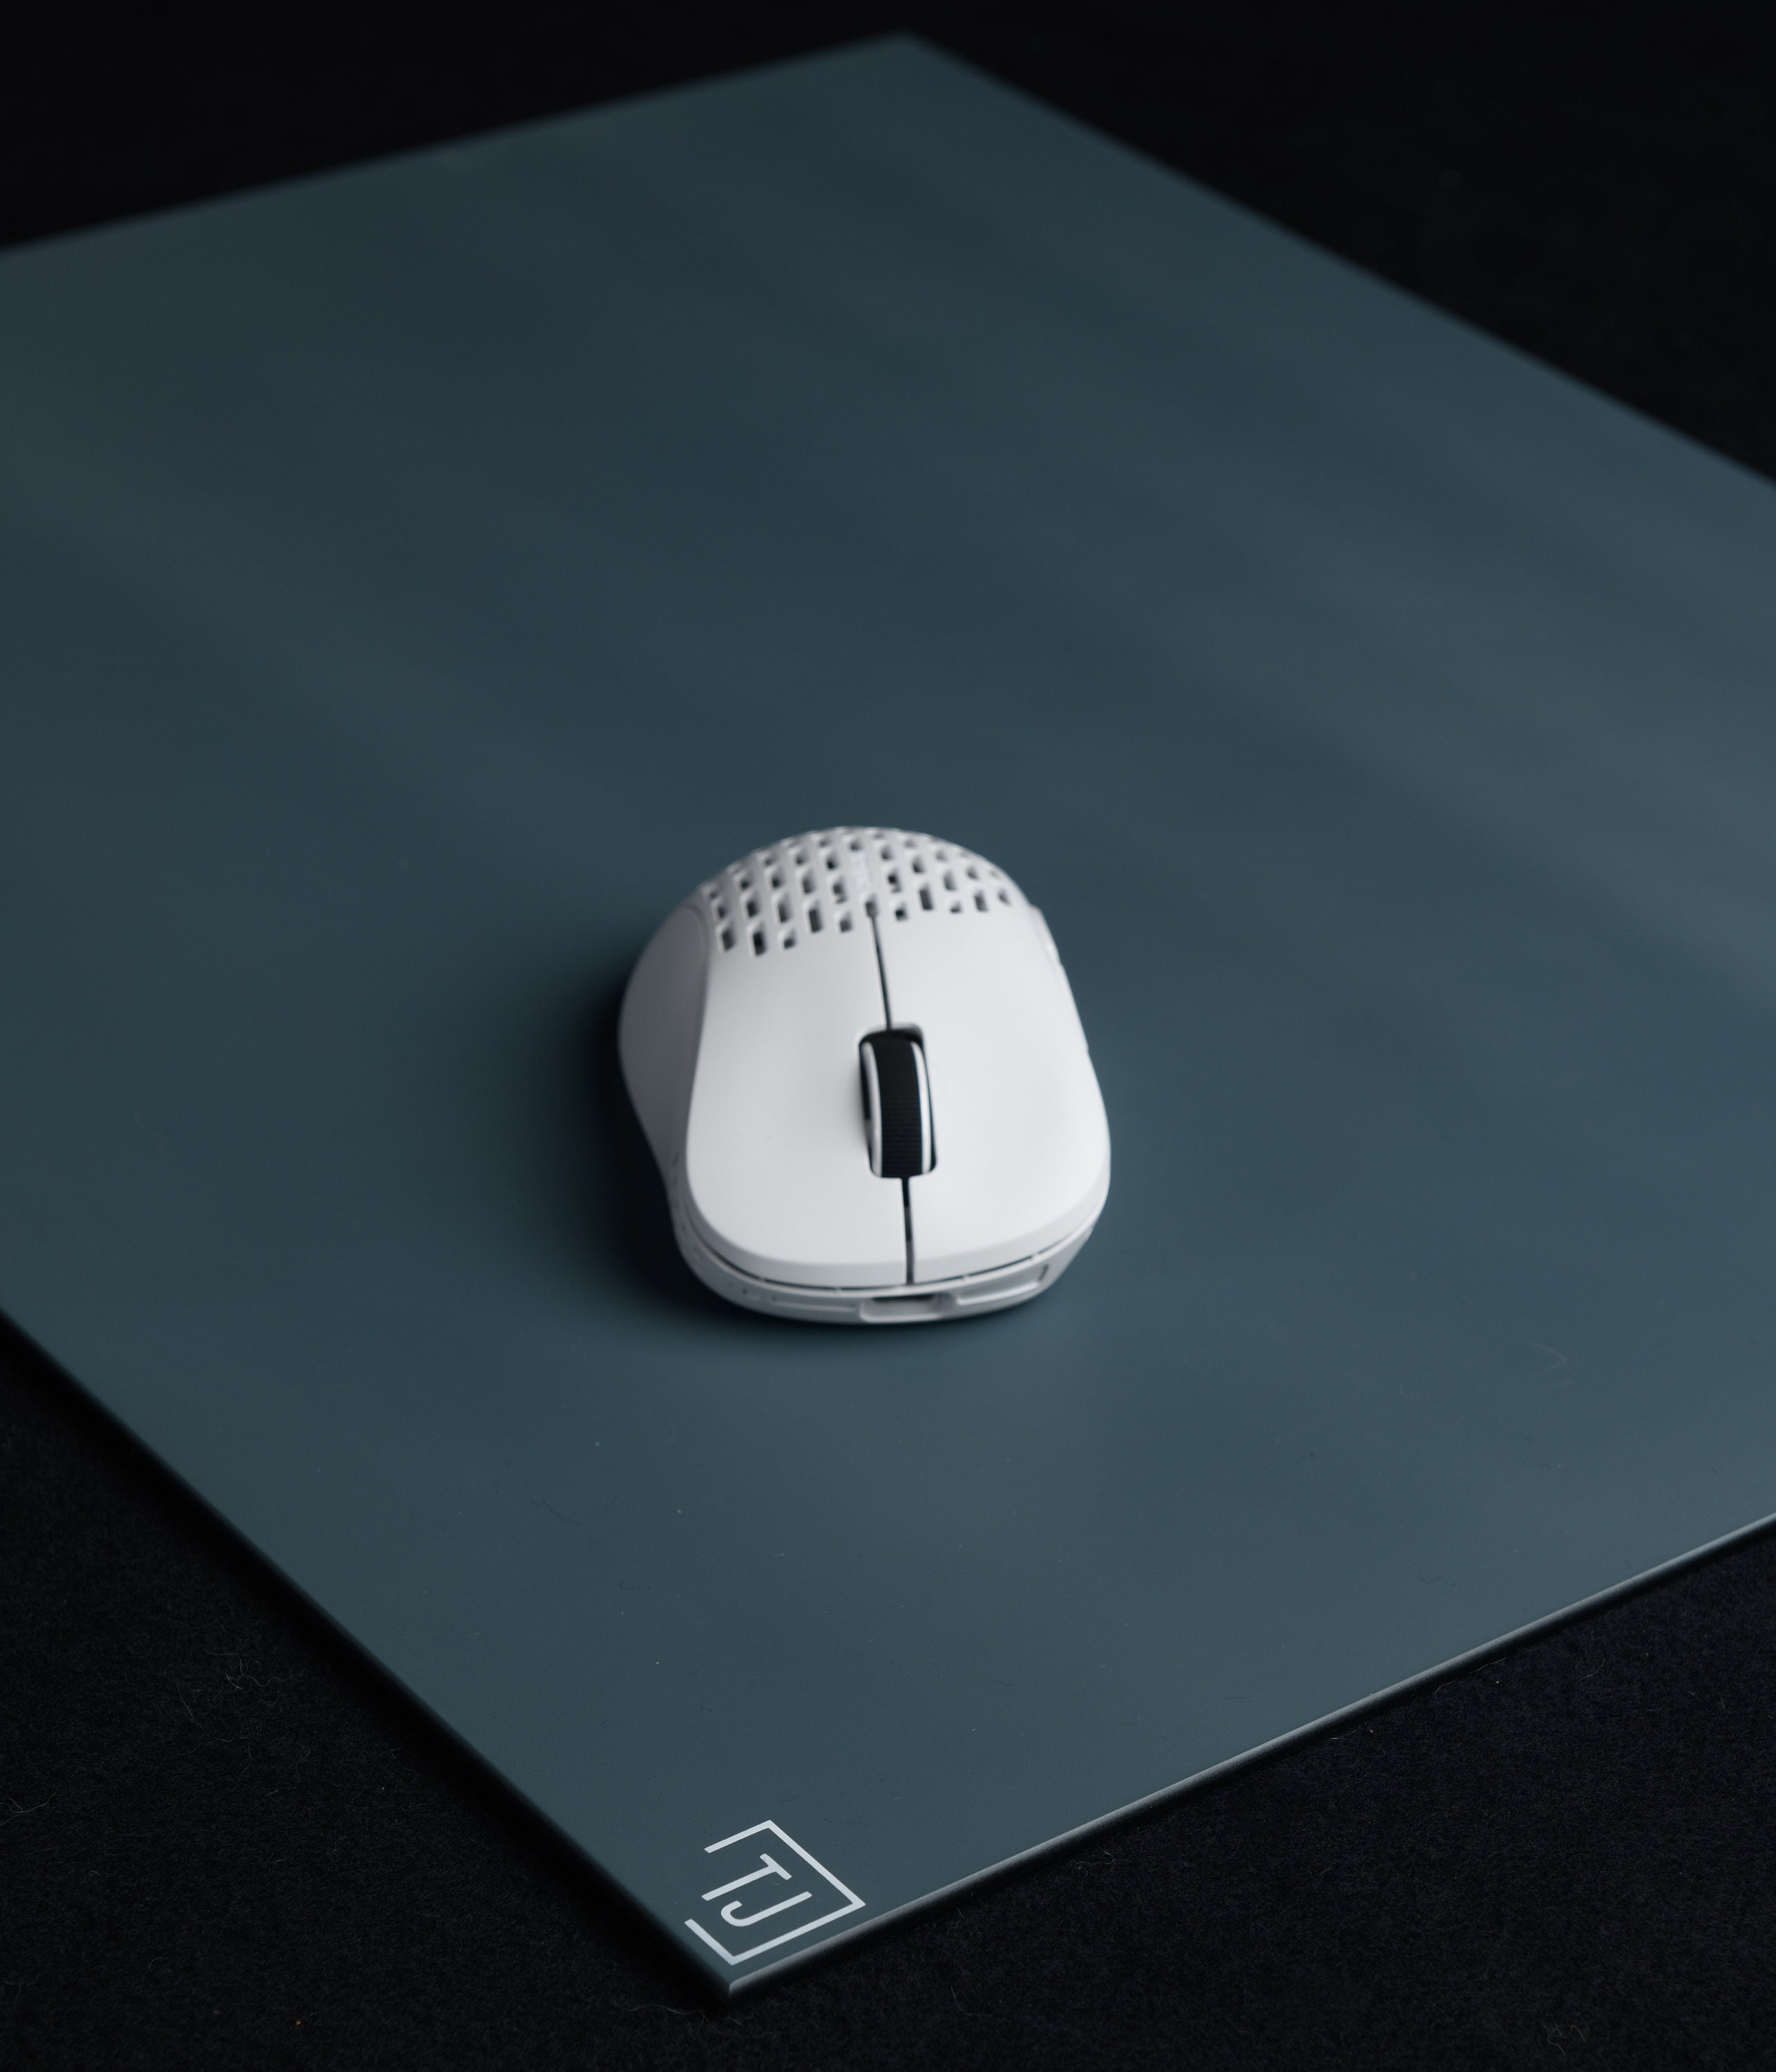 Cerapad Kin-control Based-ceramic Coated Gaming Mousepad - Etsy